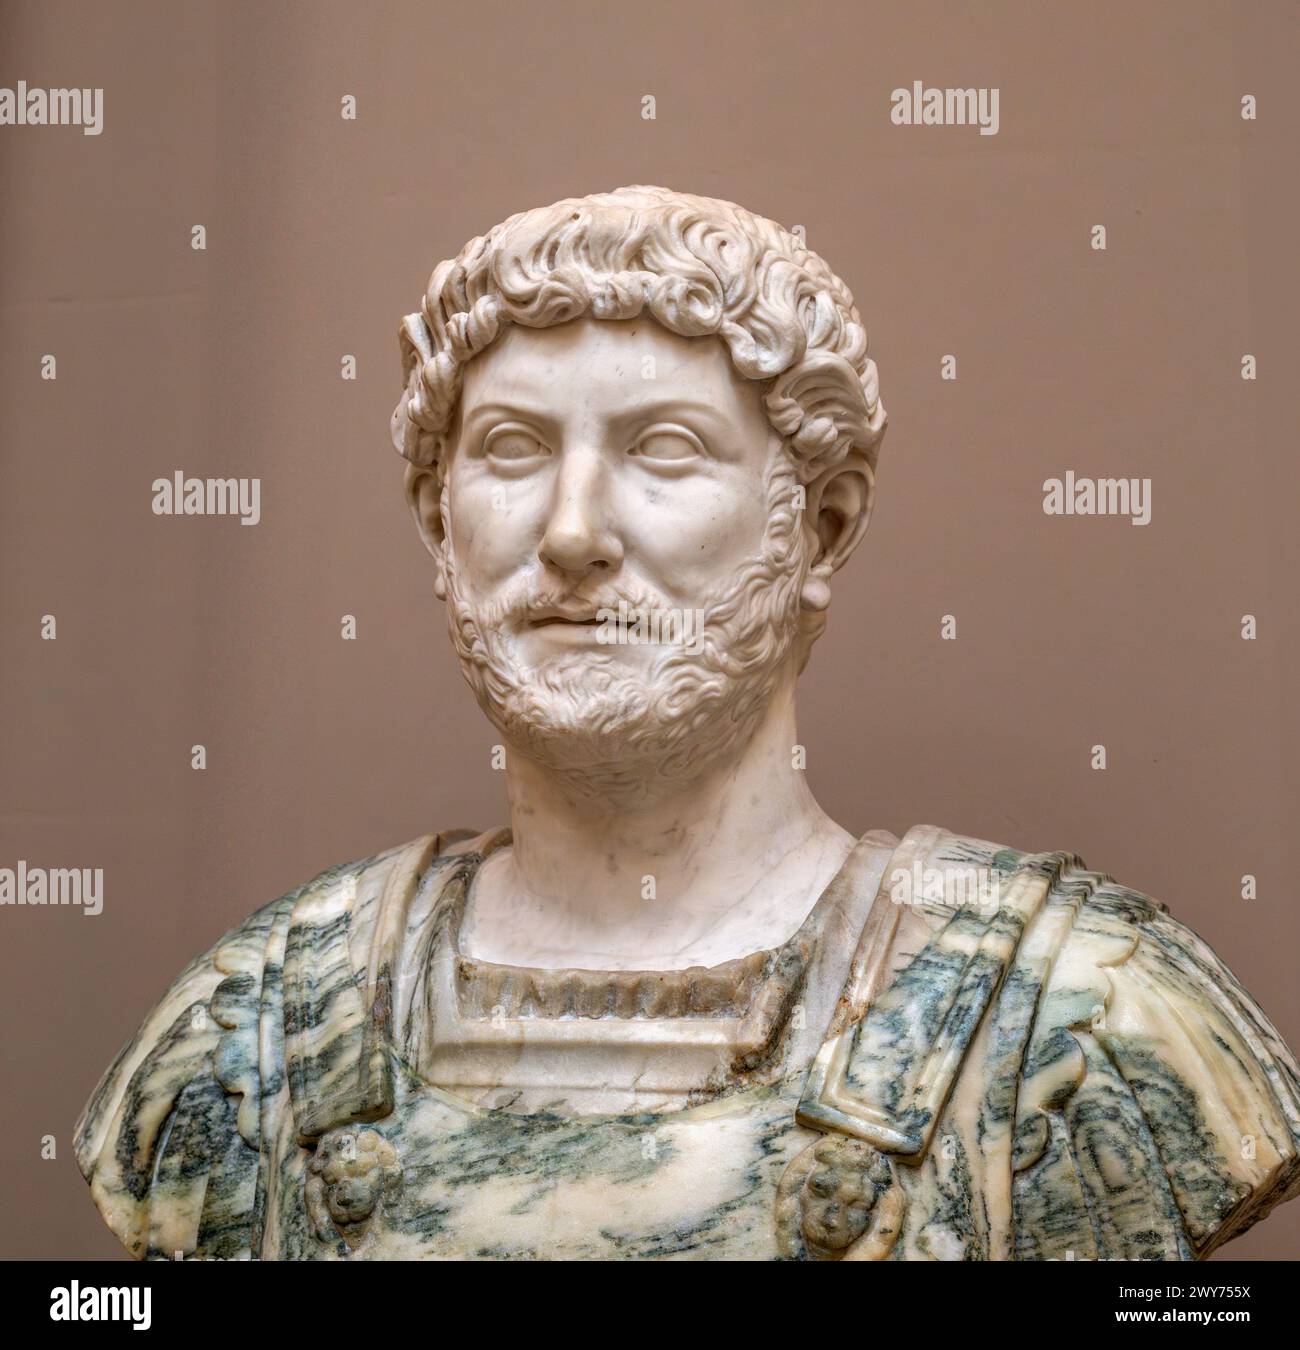 Tête en marbre de l'empereur romain Hadrien (AD 76 - AD 138), c. 1700-1800 Banque D'Images